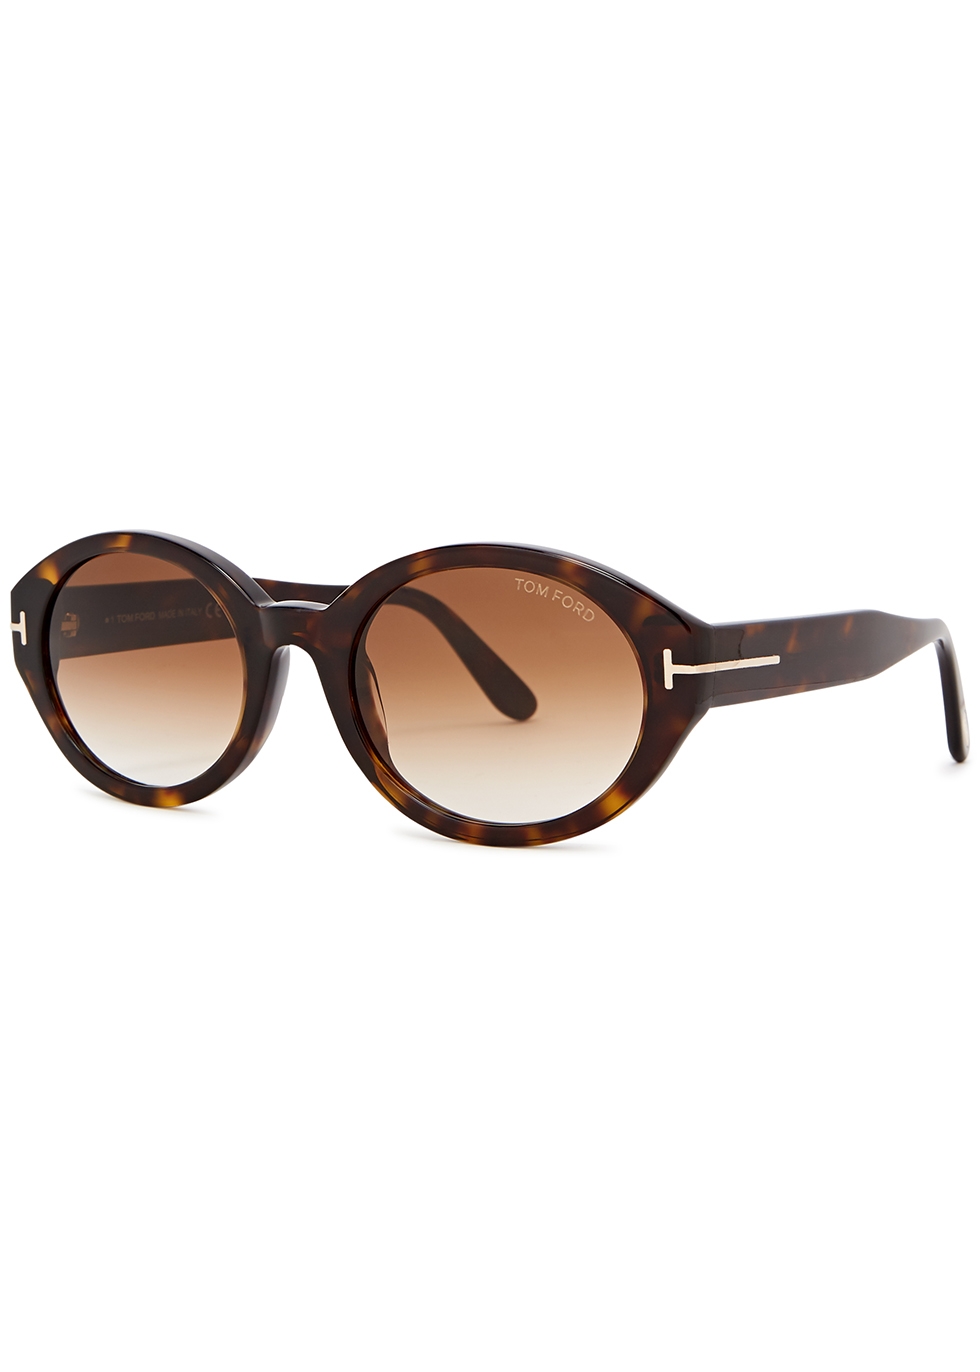 Tom Ford Genevieve-02 tortoiseshell oval-frame sunglasses - Harvey Nichols